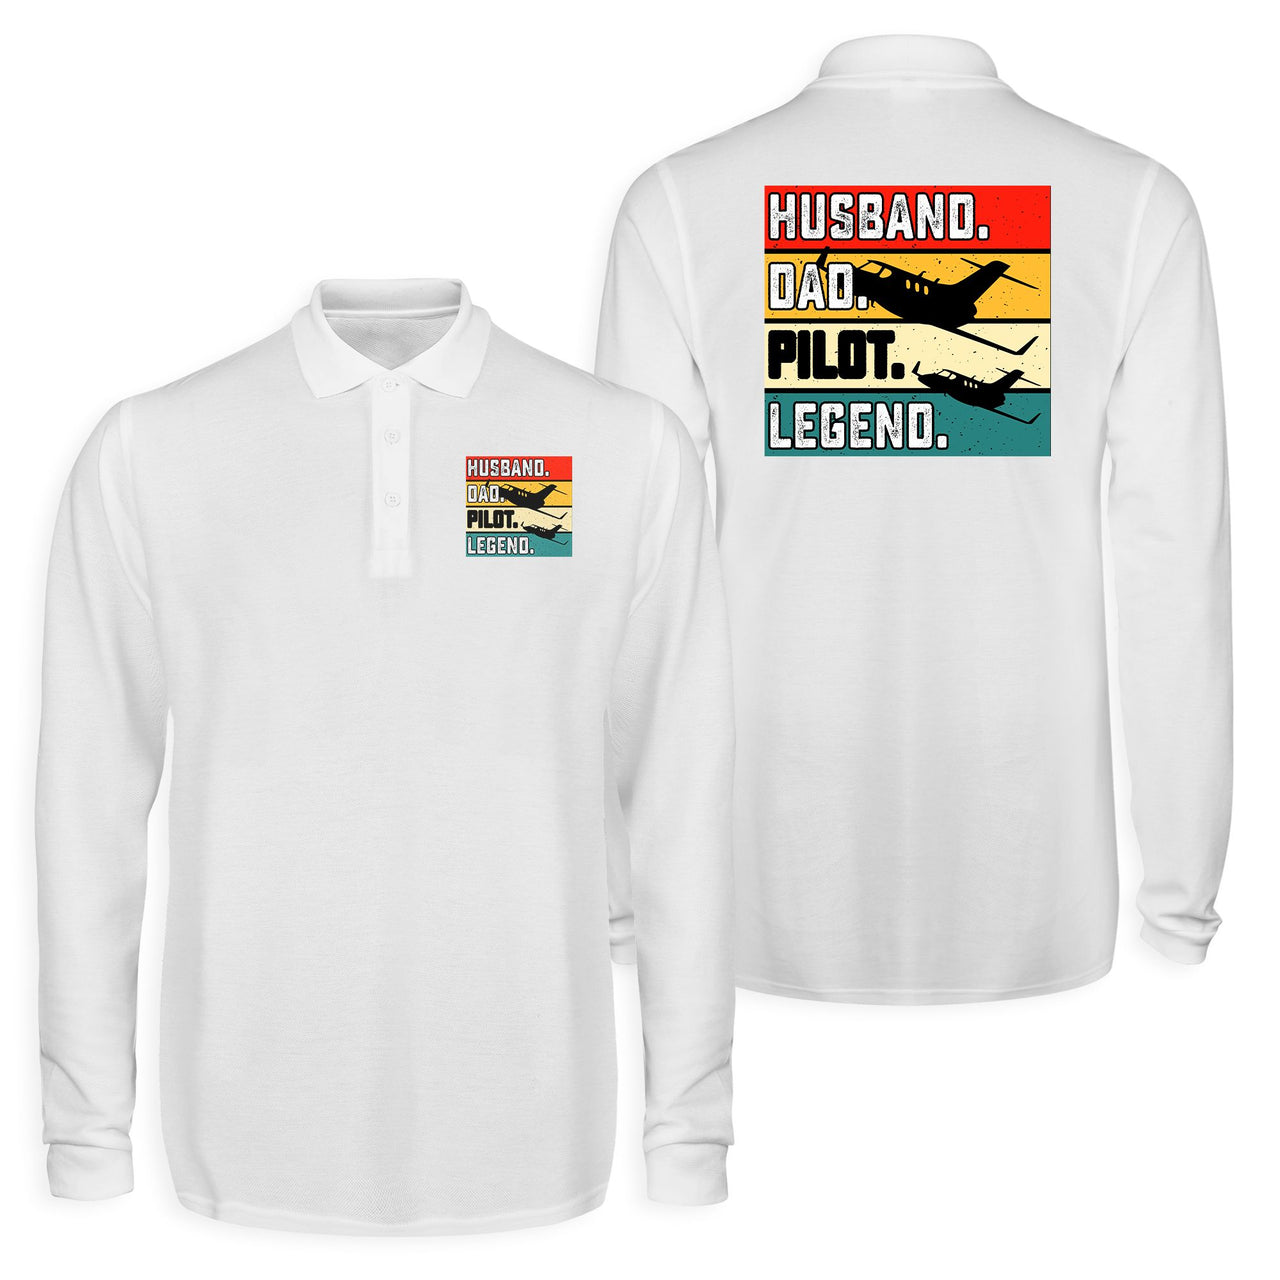 Husband & Dad & Pilot & Legend Designed Long Sleeve Polo T-Shirts (Double-Side)